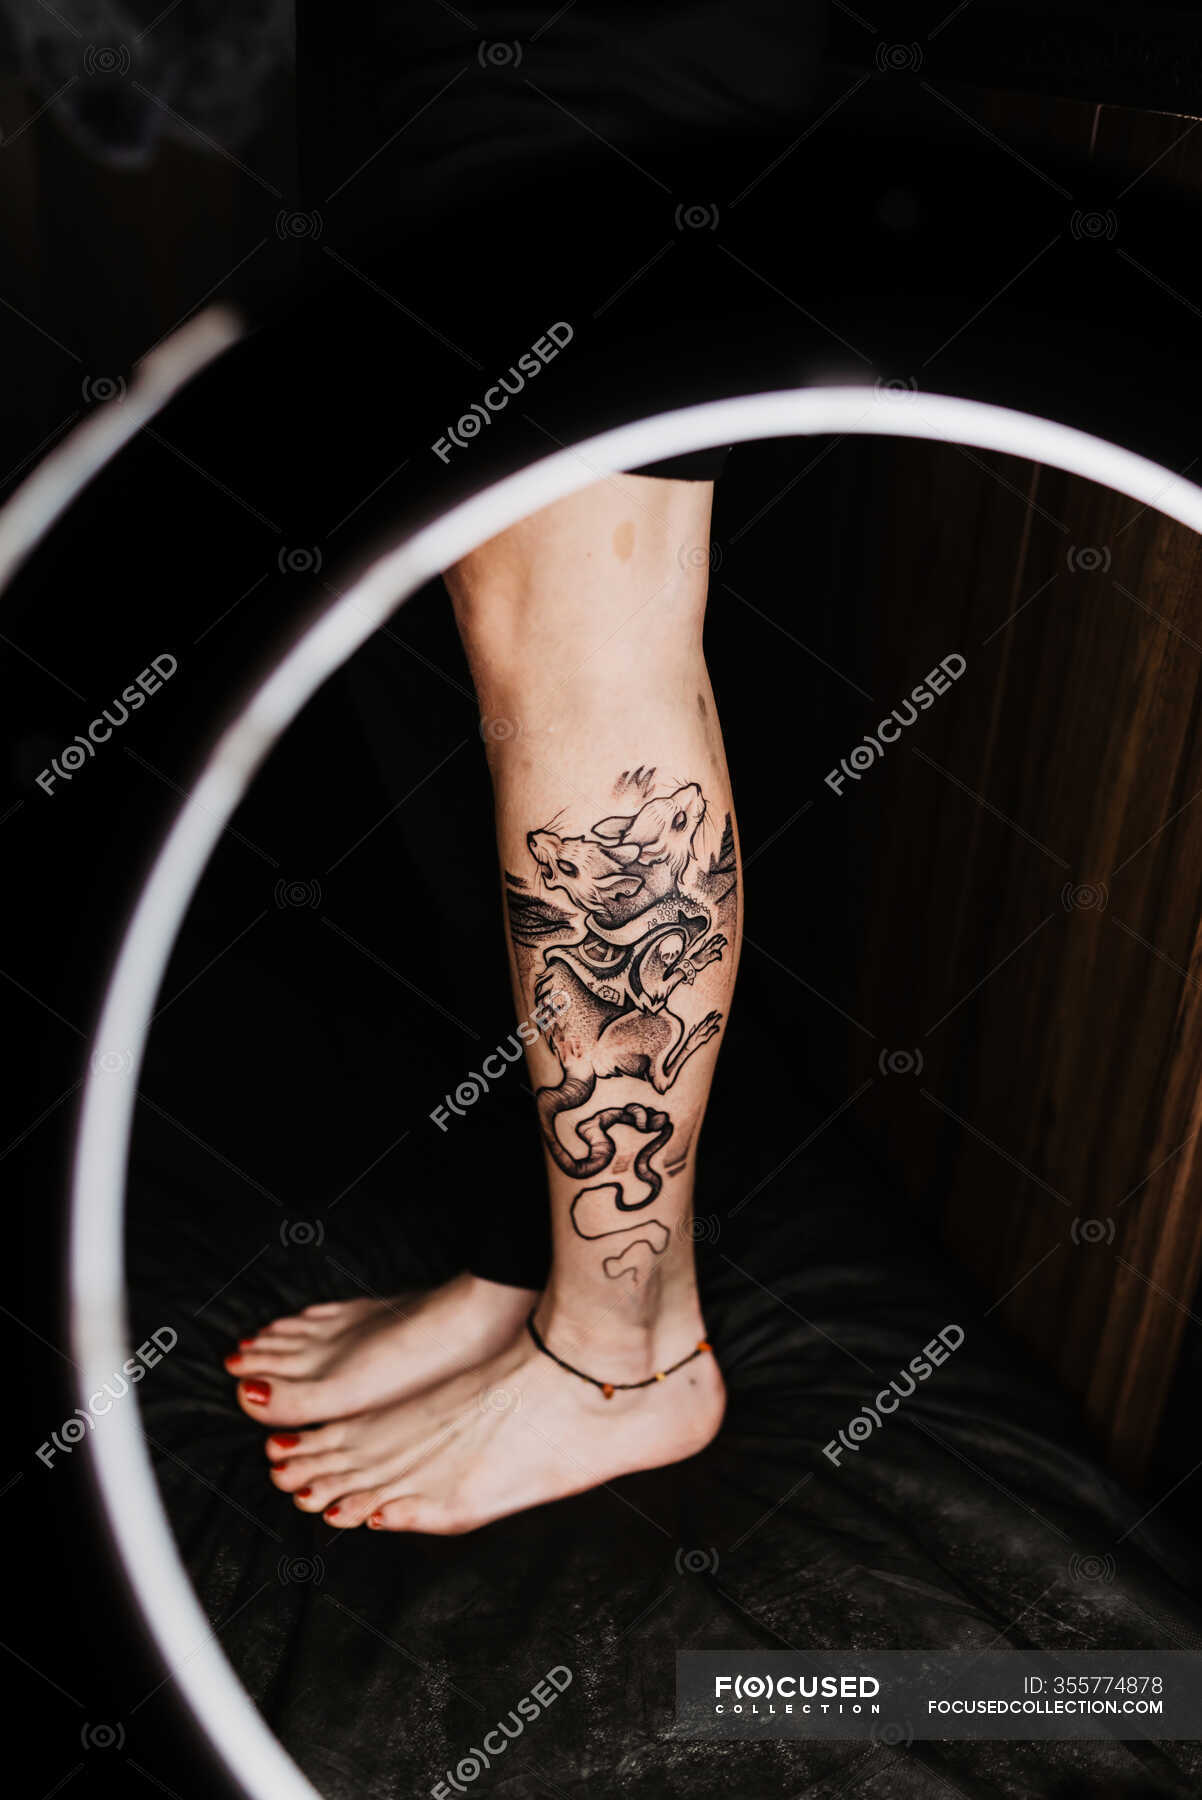 girl leg tattooTikTok Search